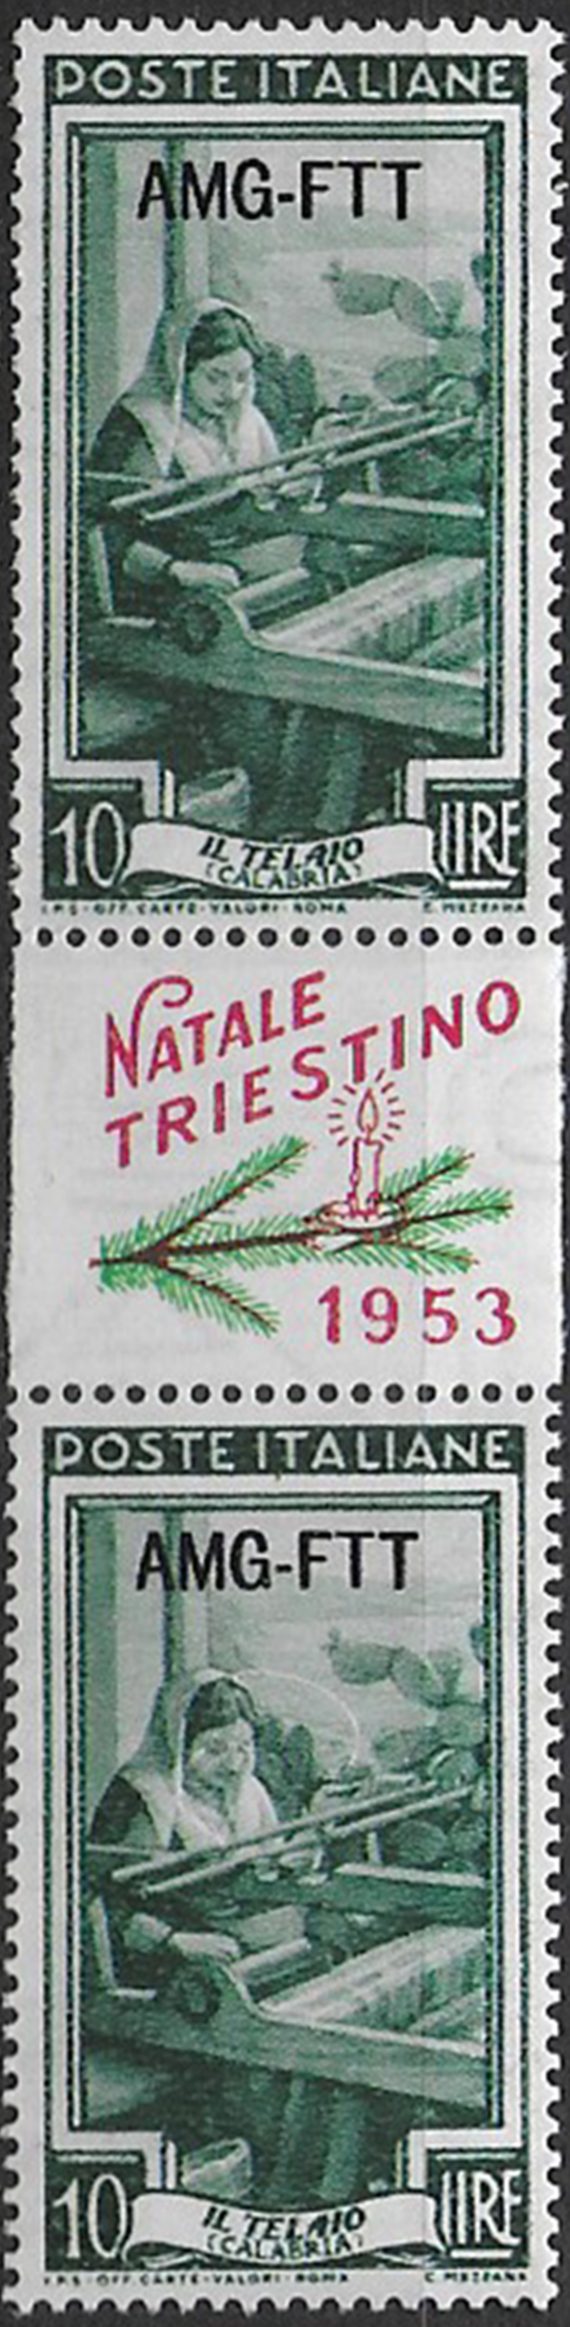 1953 Trieste A Natale triestino Lire 10 pair bf MNH Sassone n. N.T. 94